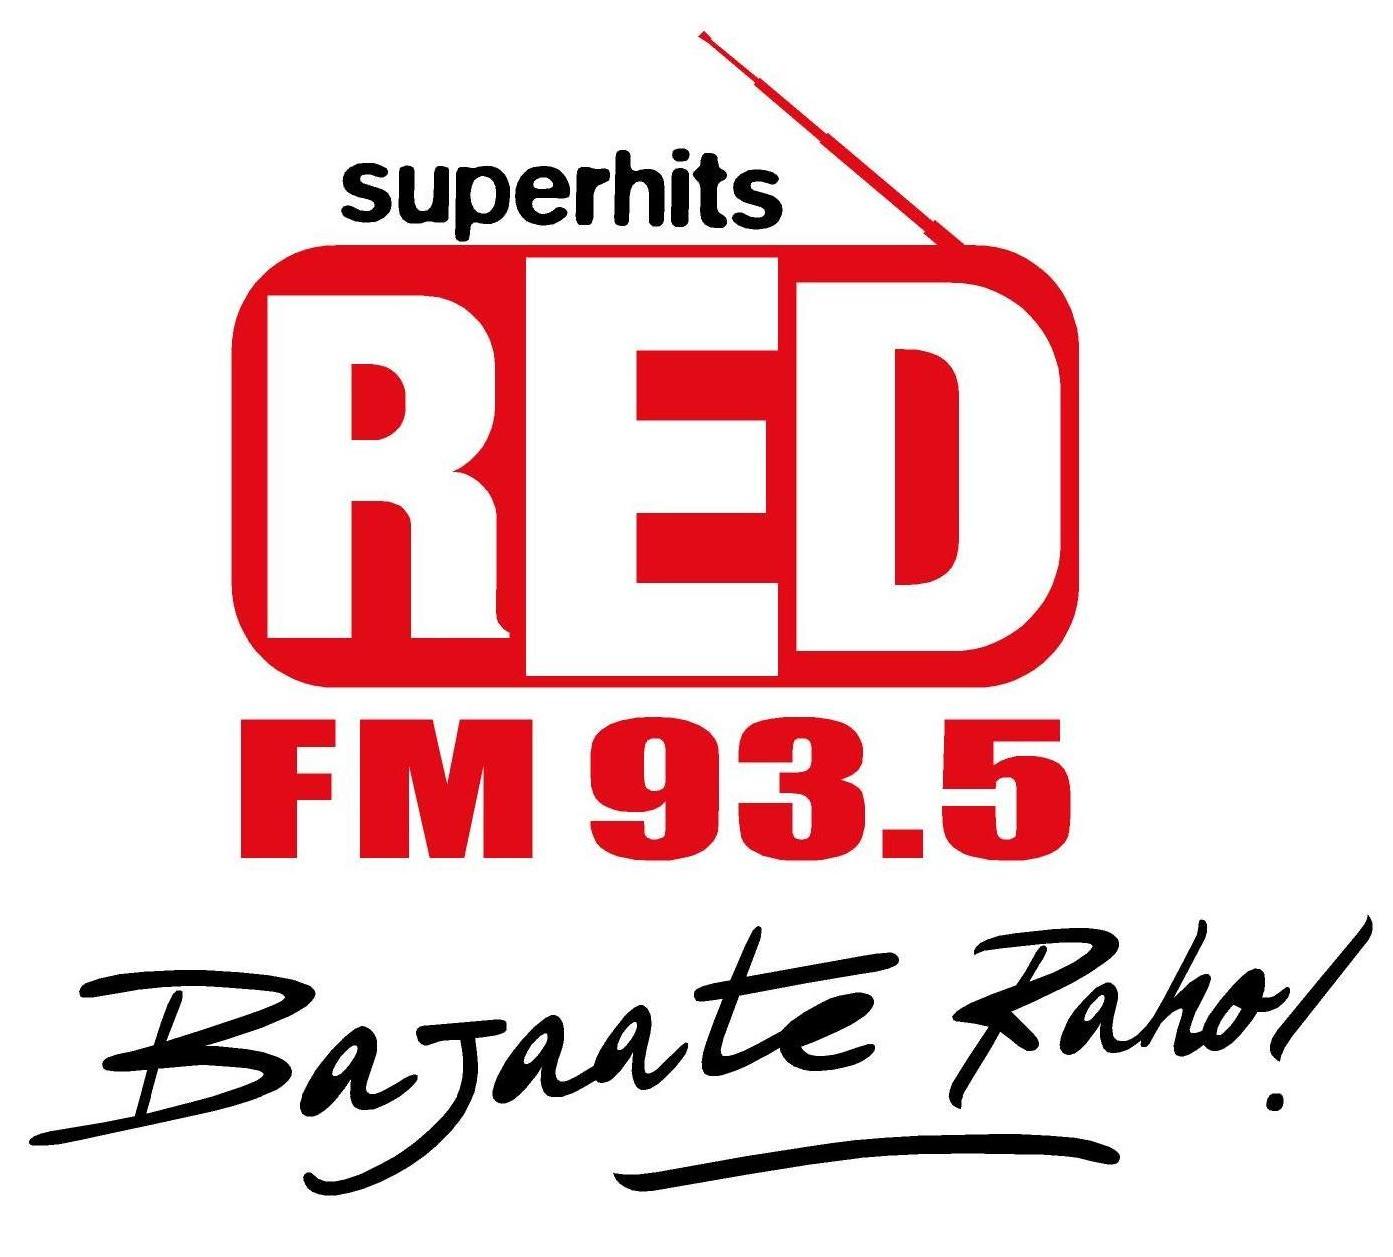 Superhits 93.5 Red FM